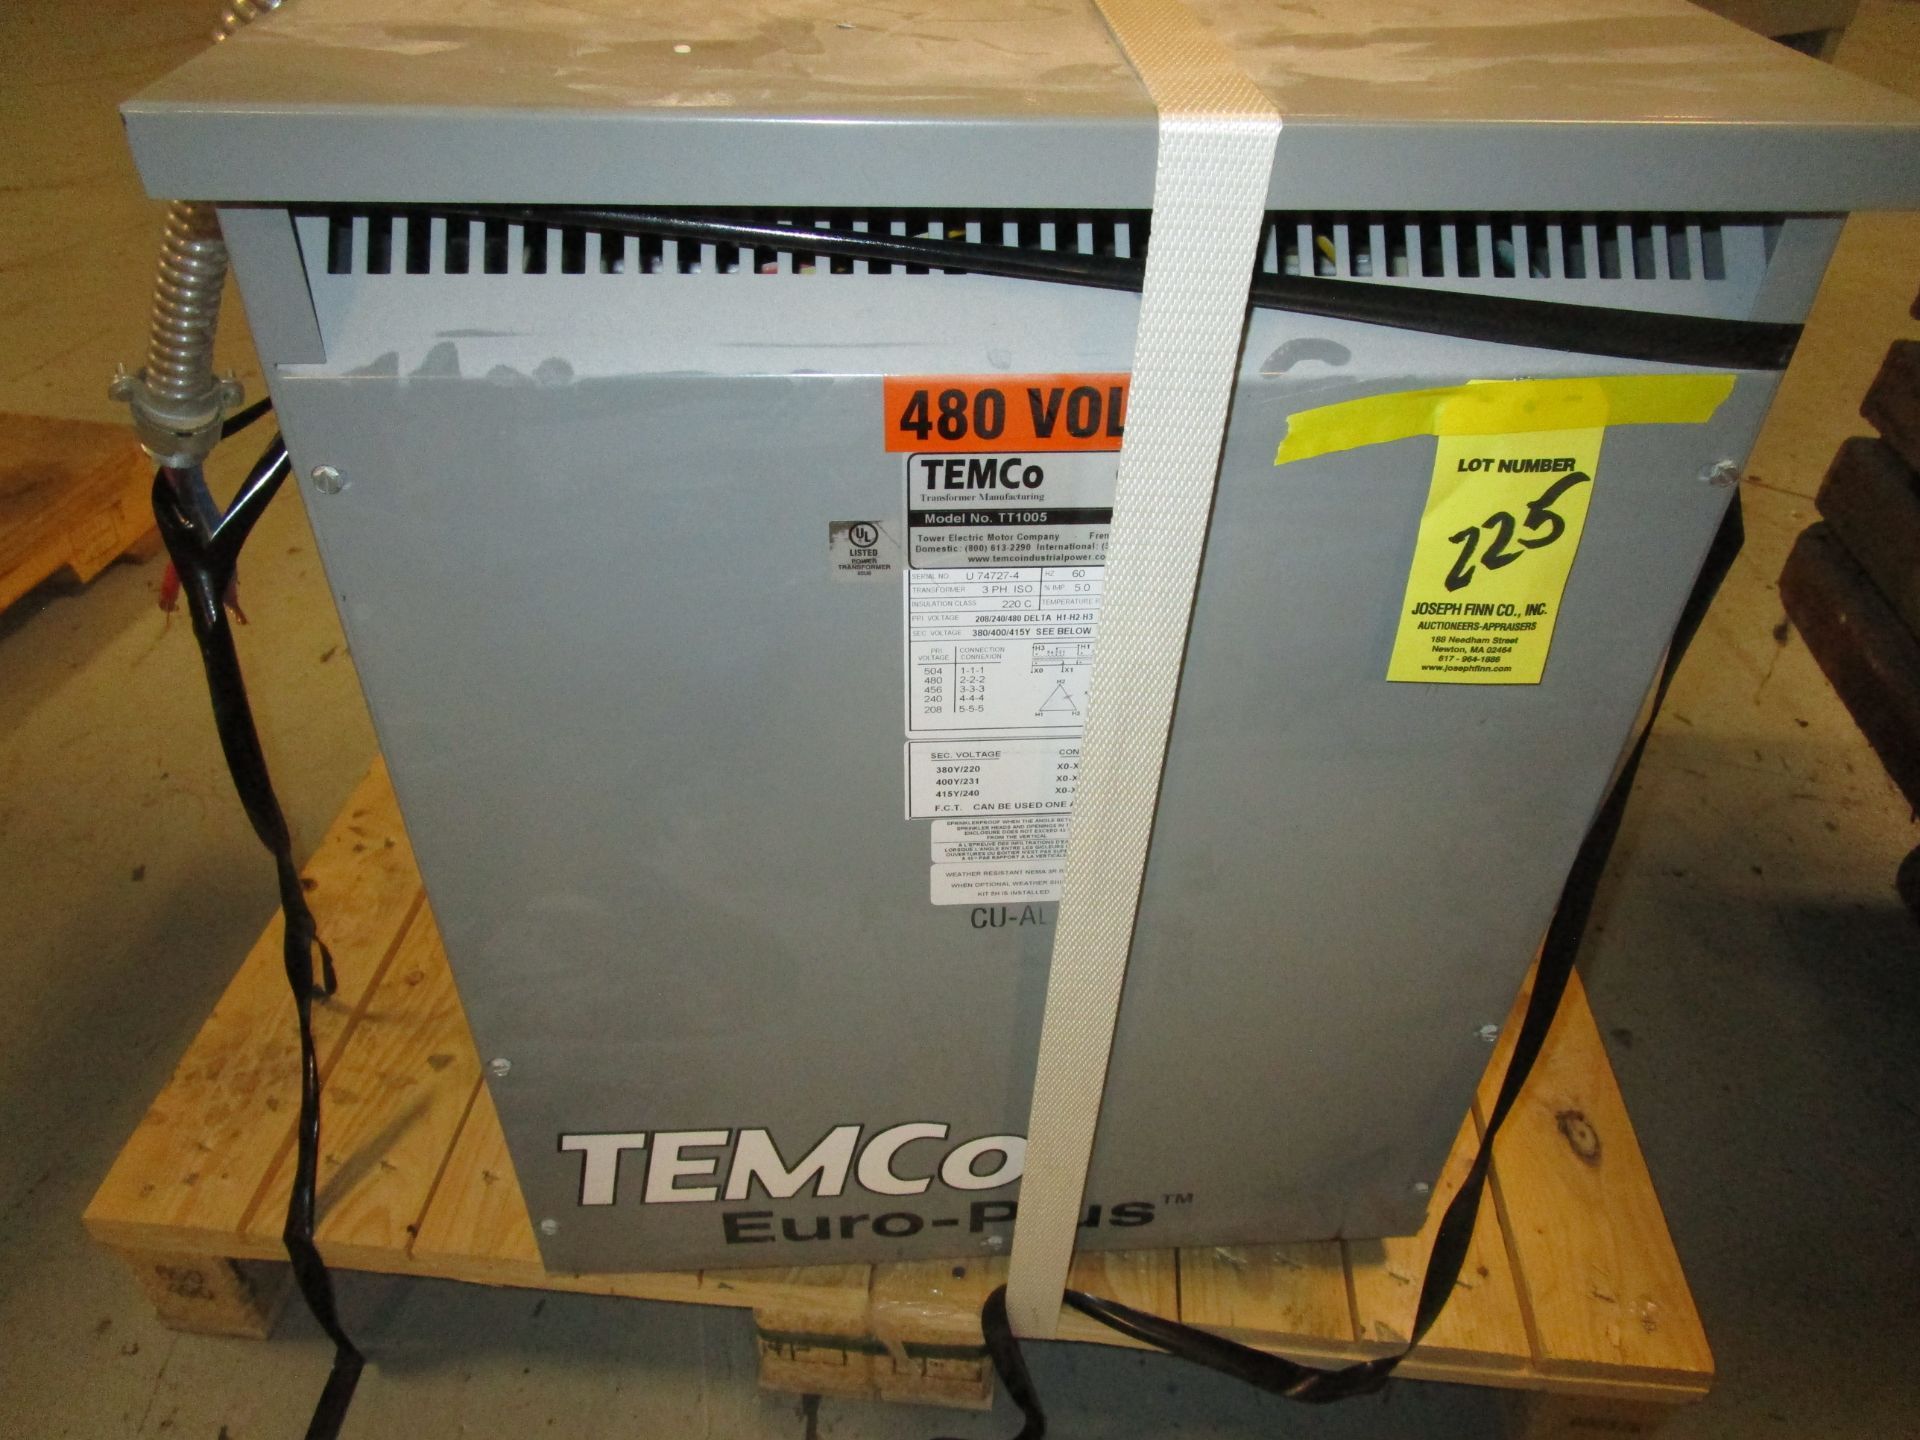 Temco TT1005 45 KVA Transformer s/n U74727-4